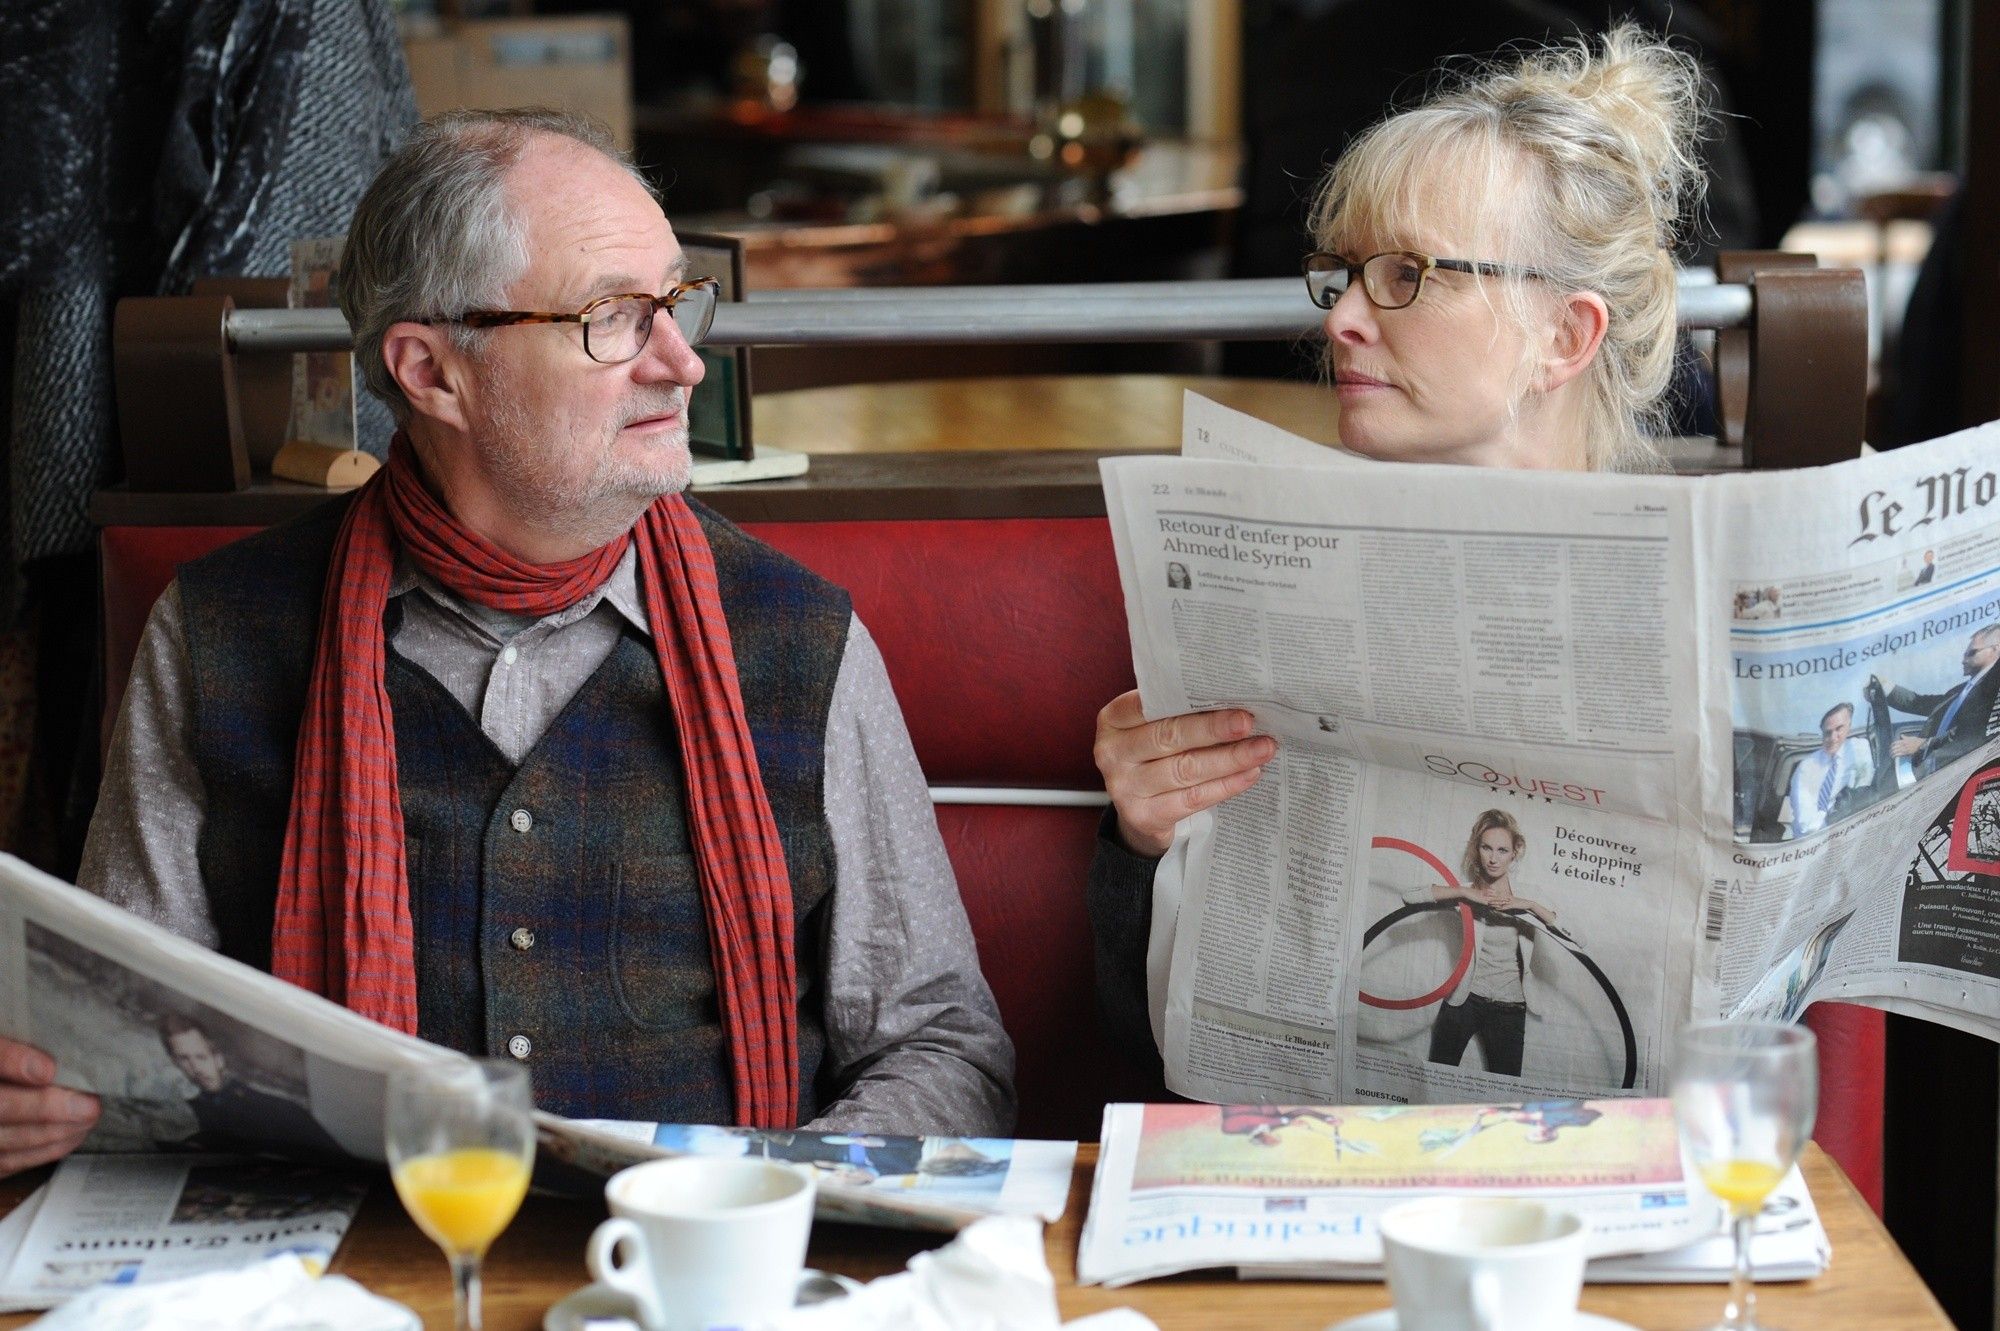 Jim Broadbent stars as Nick and Lindsay Duncan stars as Meg in Music Box Films' Le Week-End (2014)